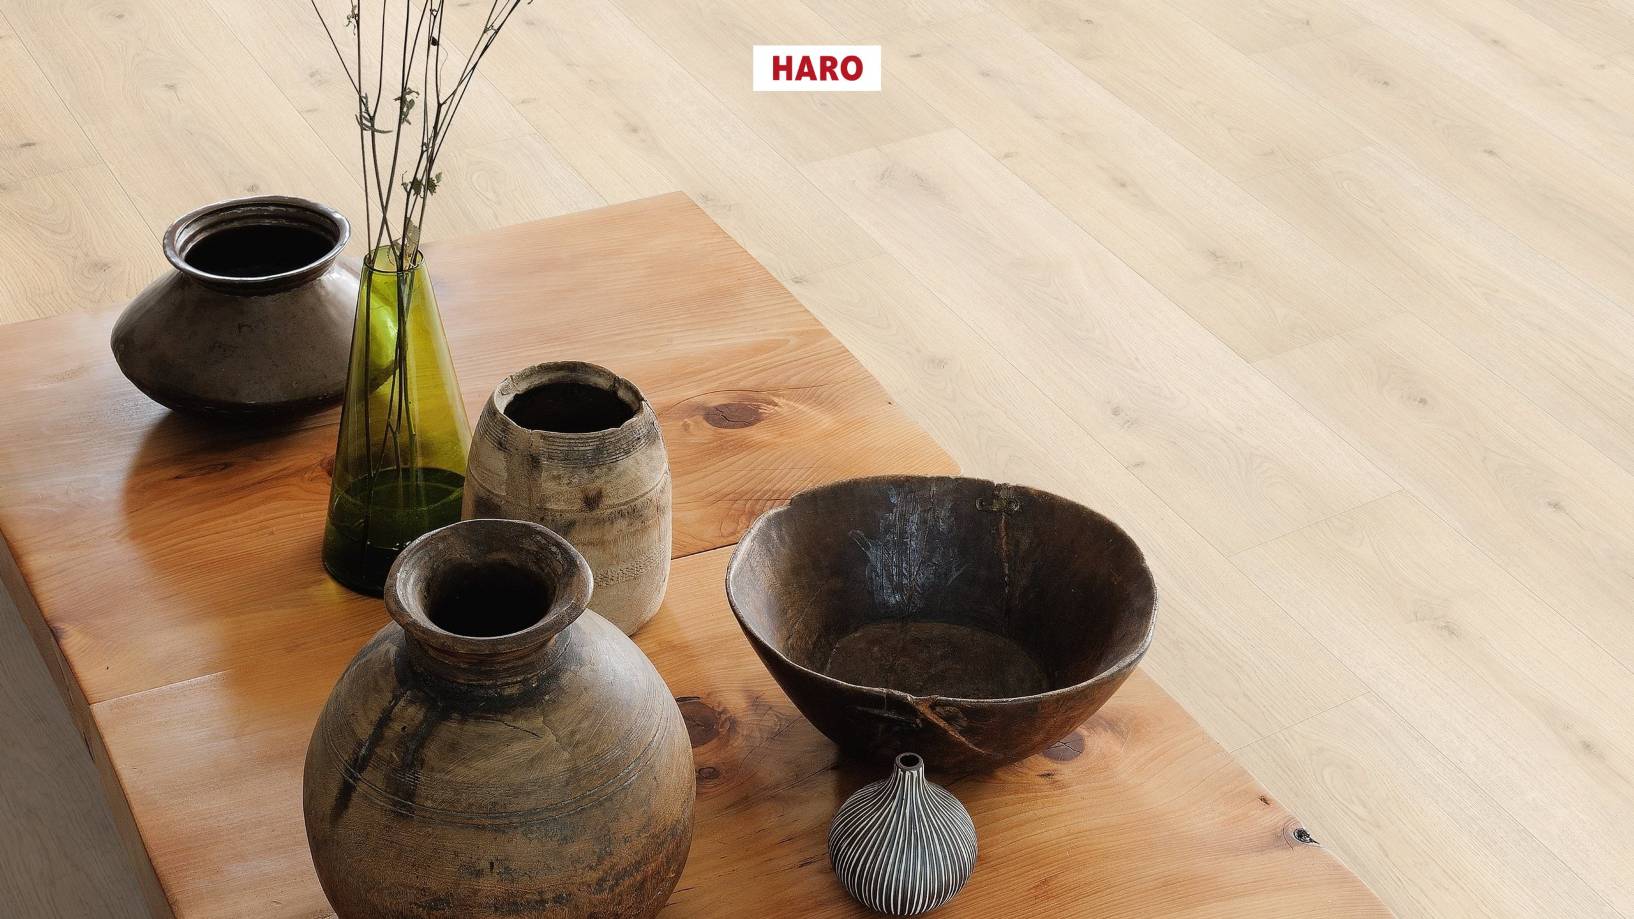 HARO - Hamberger Flooring GmbH &amp; Co. KG